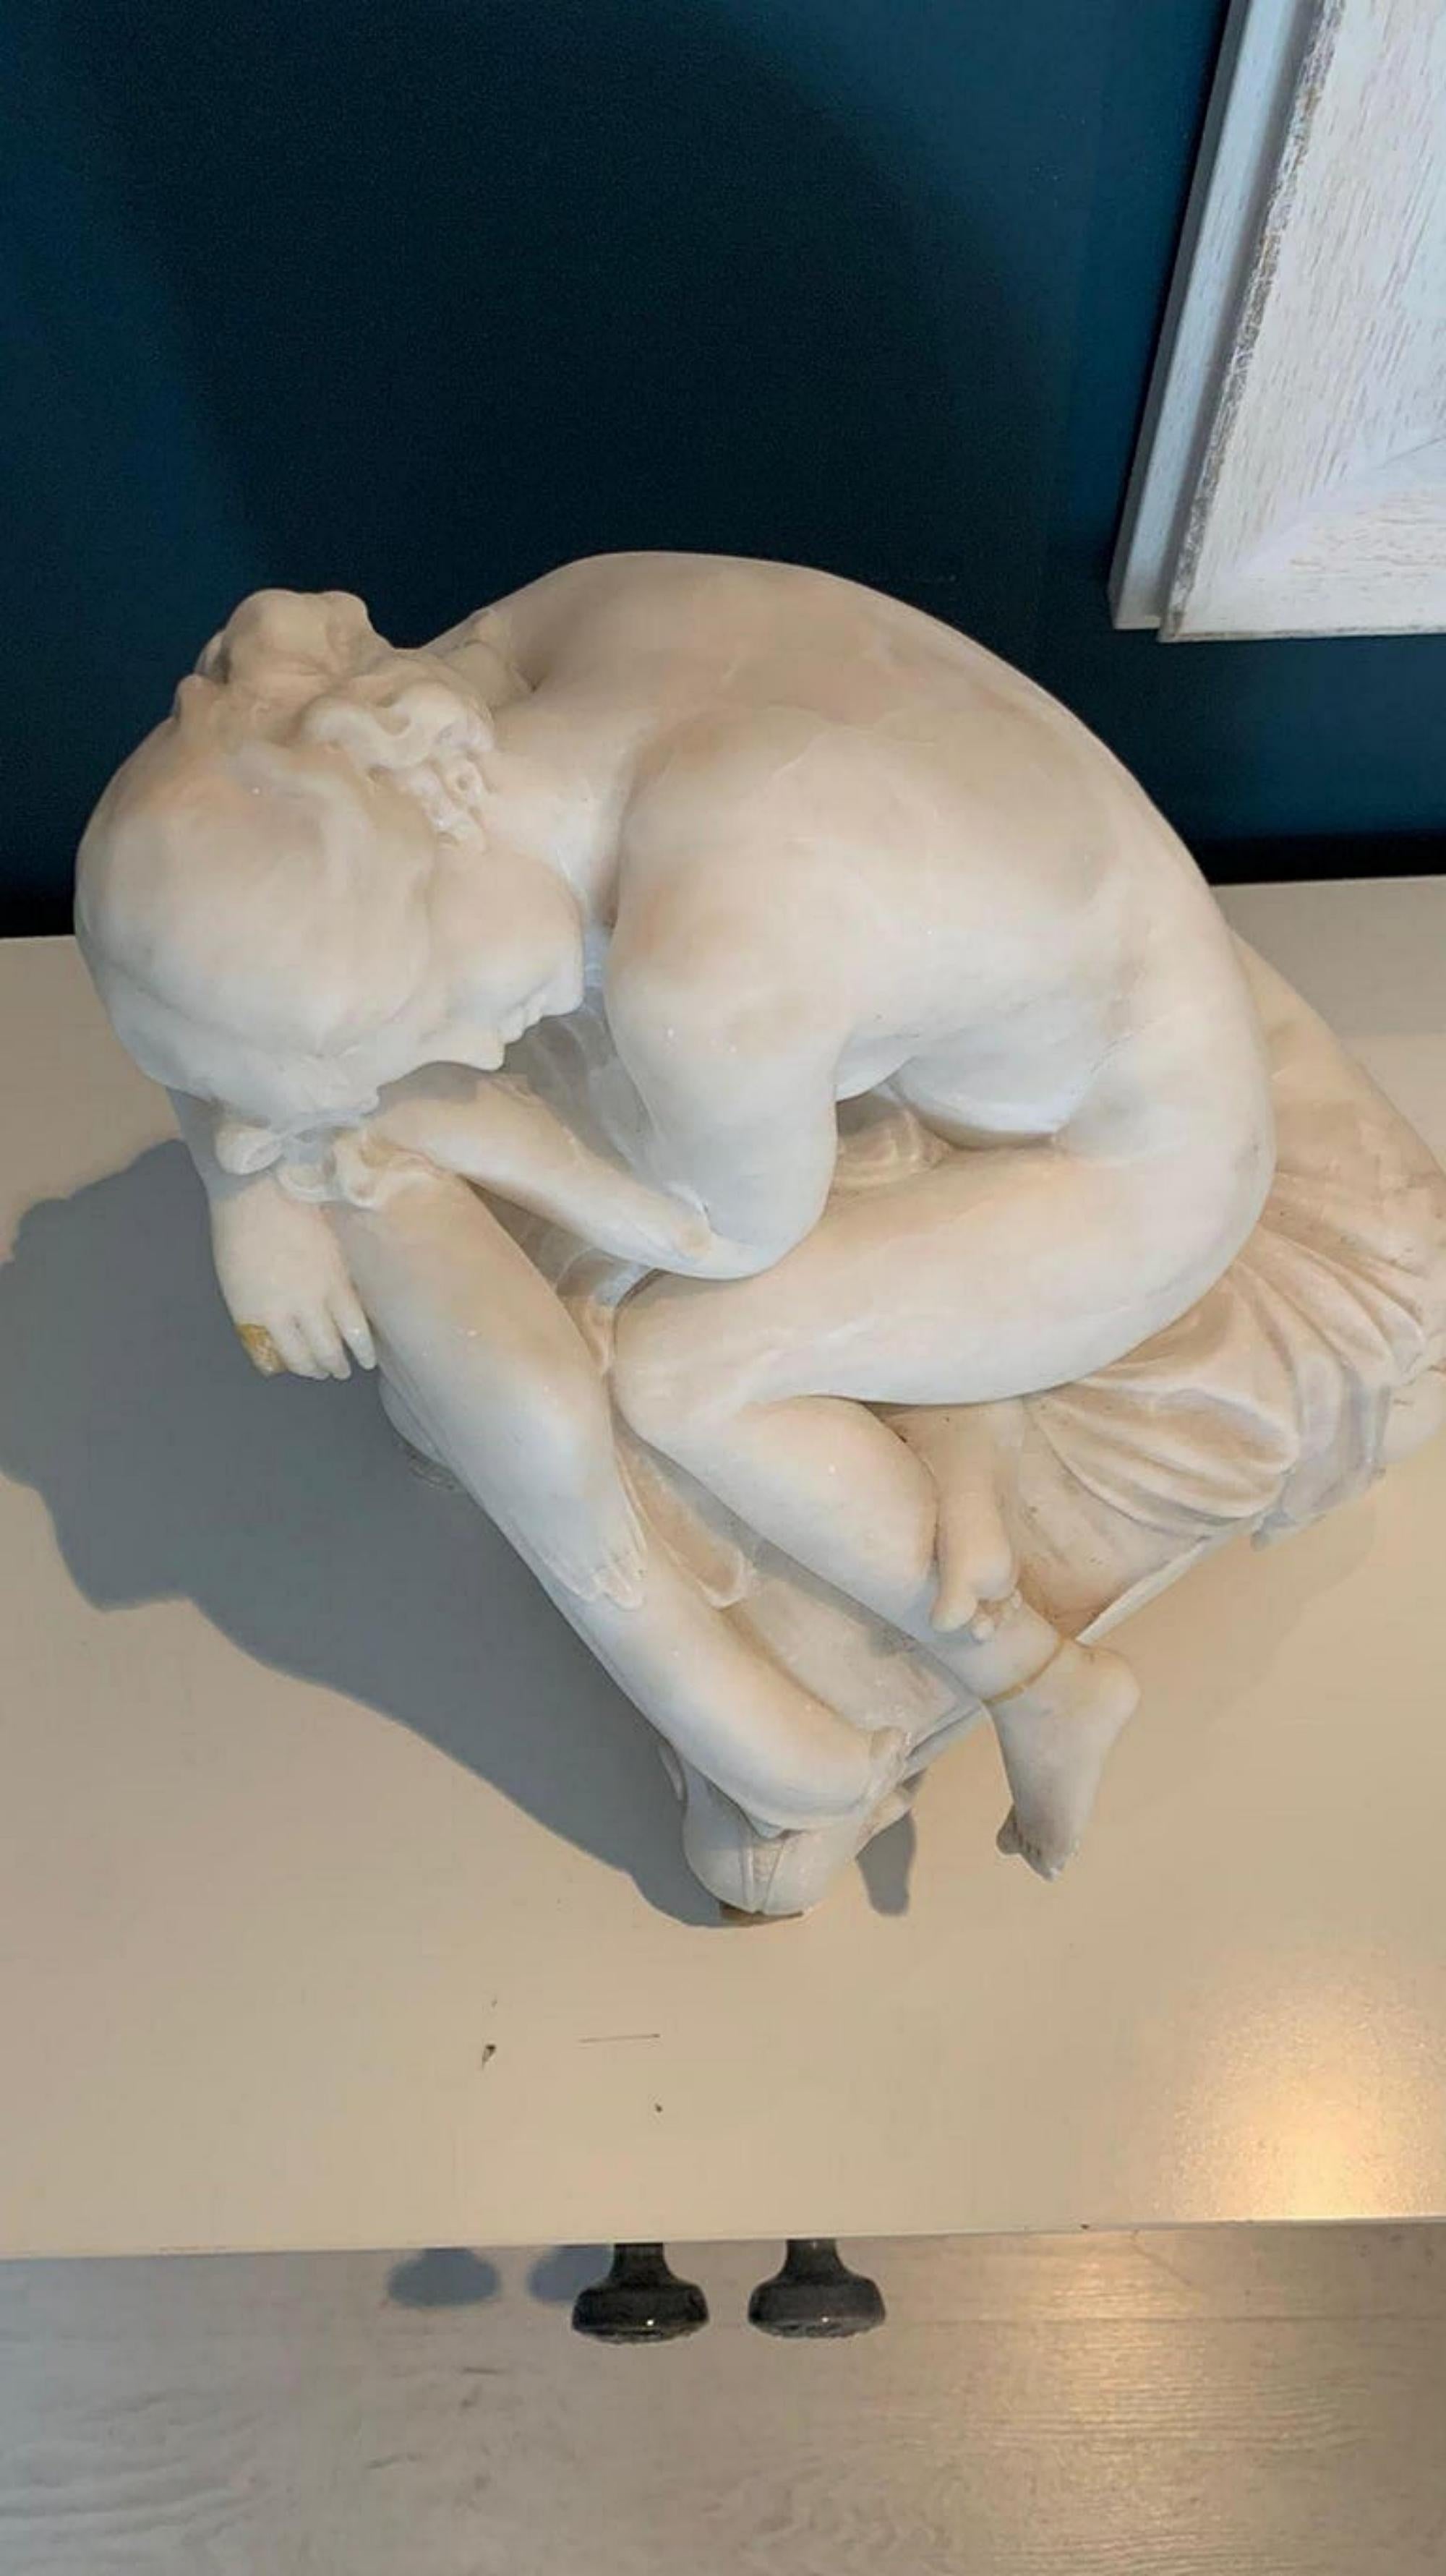 Umberto Stiaccini, 19th century
Italian white marble sculpture 